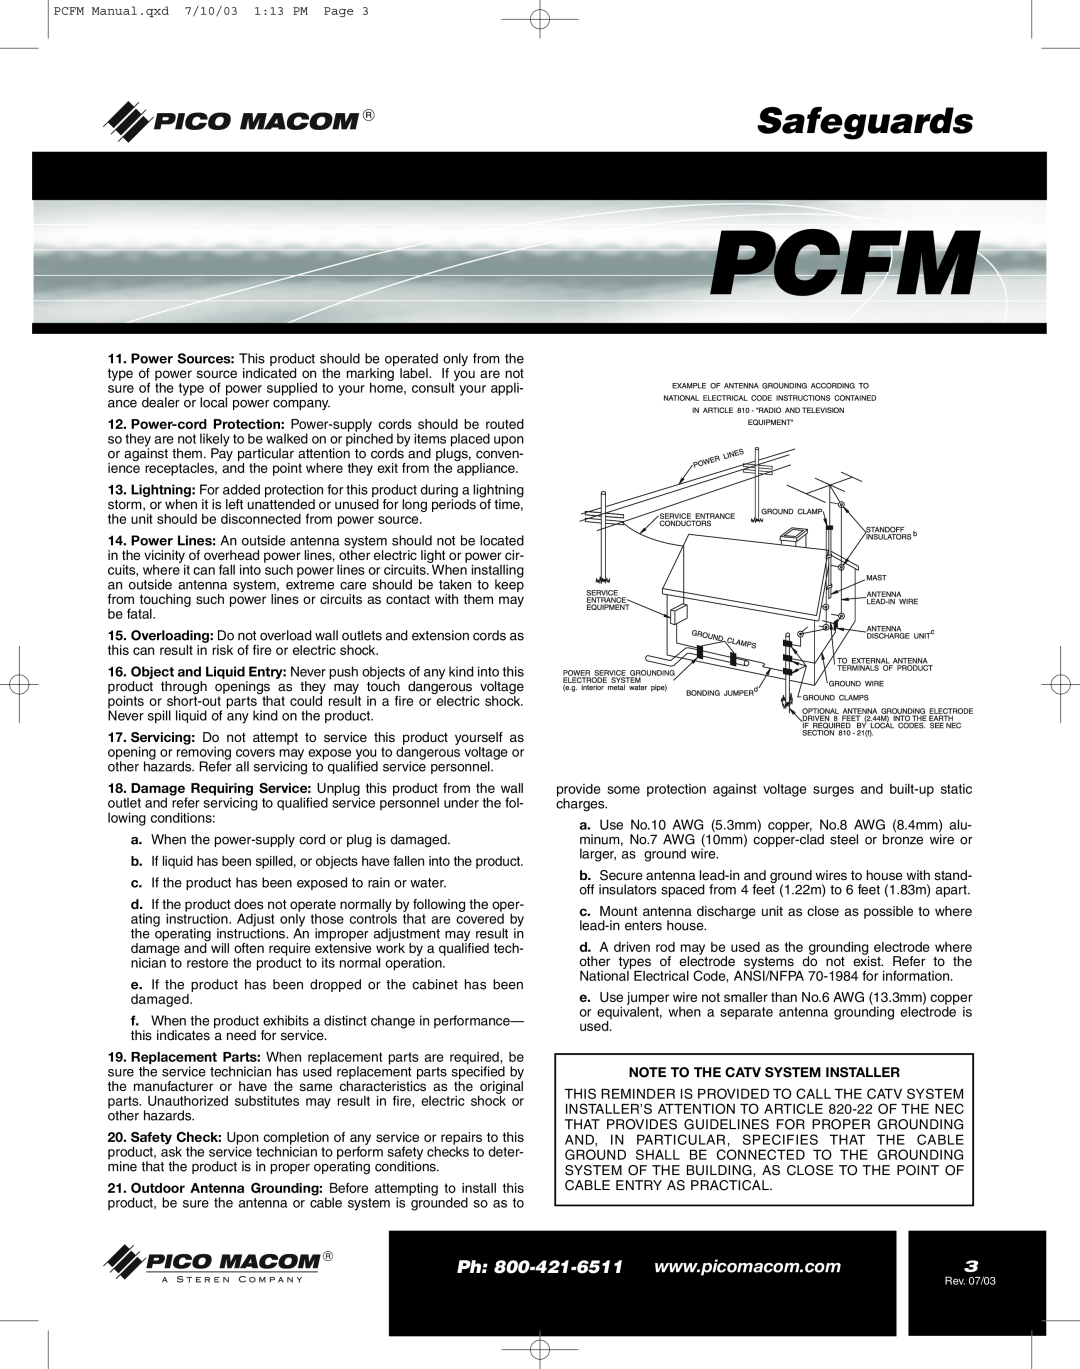 Pico Macom FM Stereo Audio Modulator operation manual Pcfm, Safeguards, Note To The Catv System Installer 